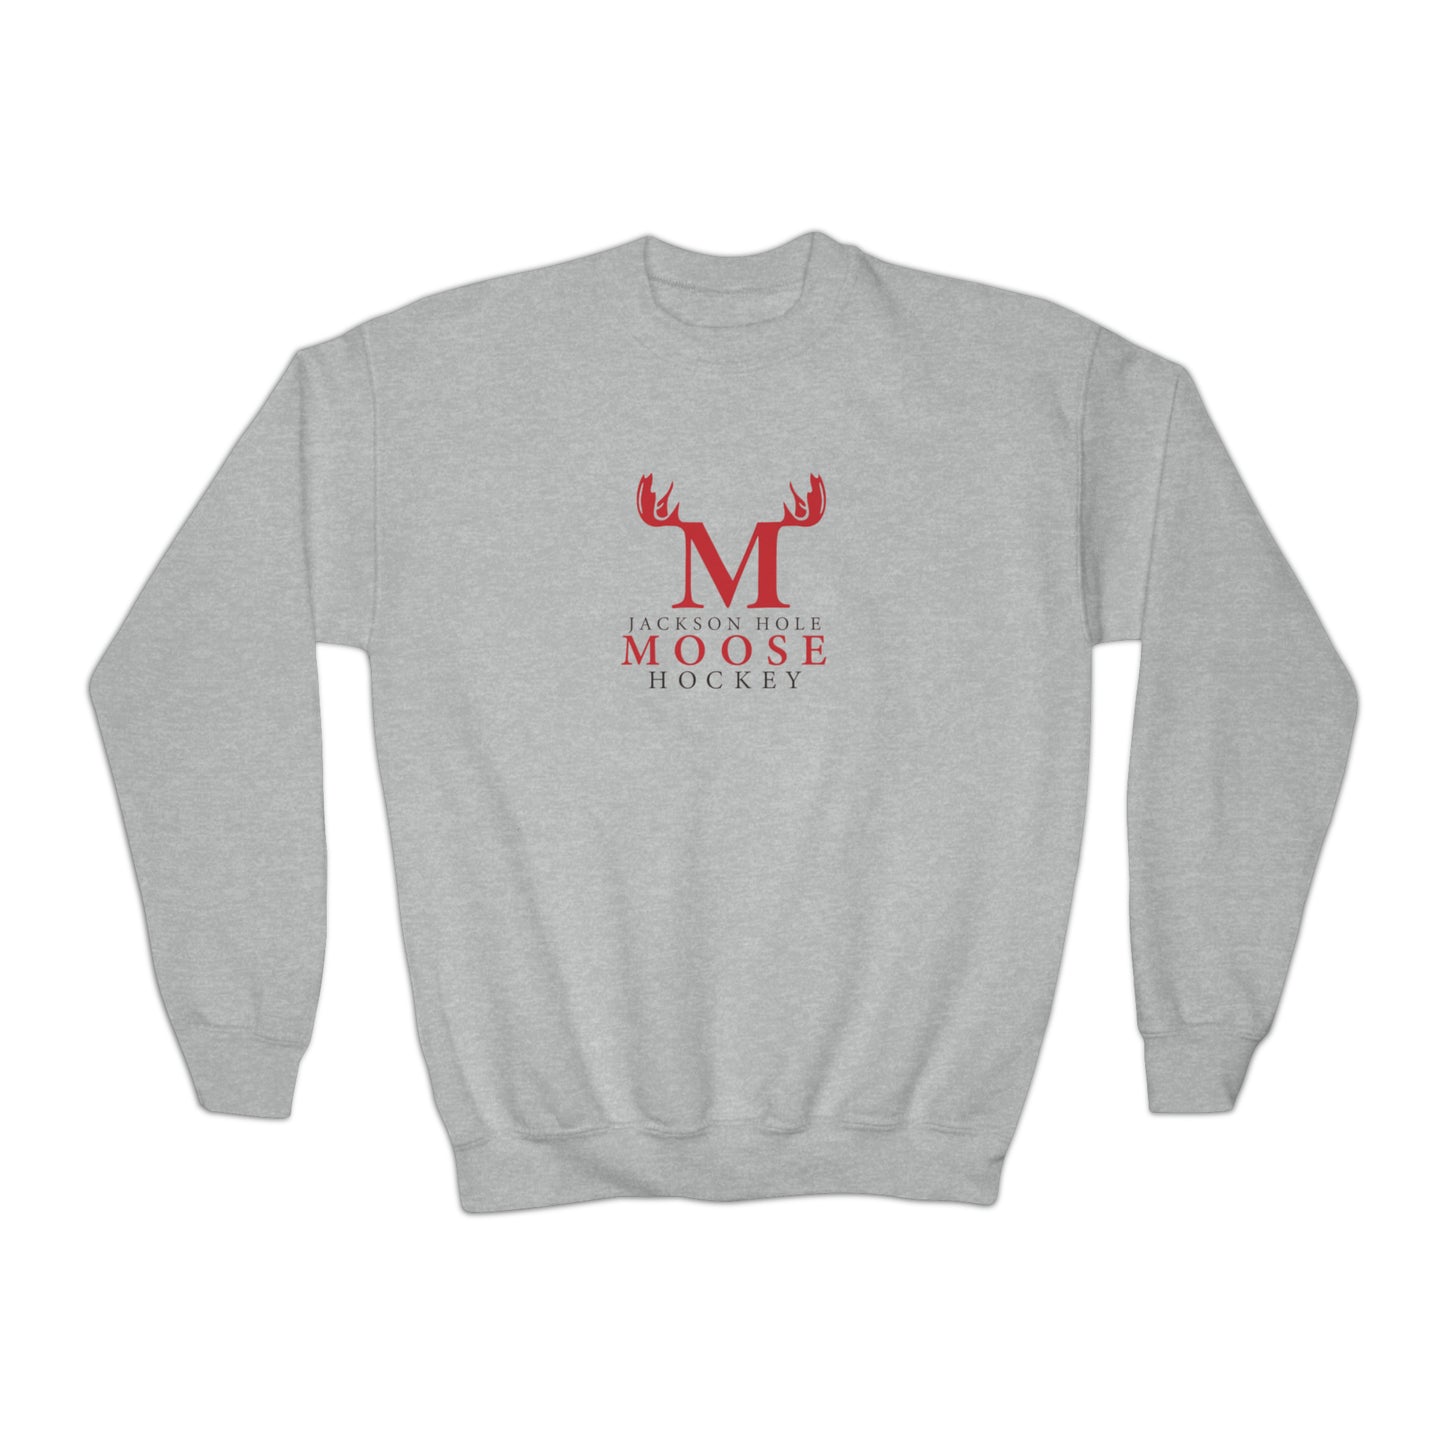 The "M" Youth Crewneck Sweatshirt